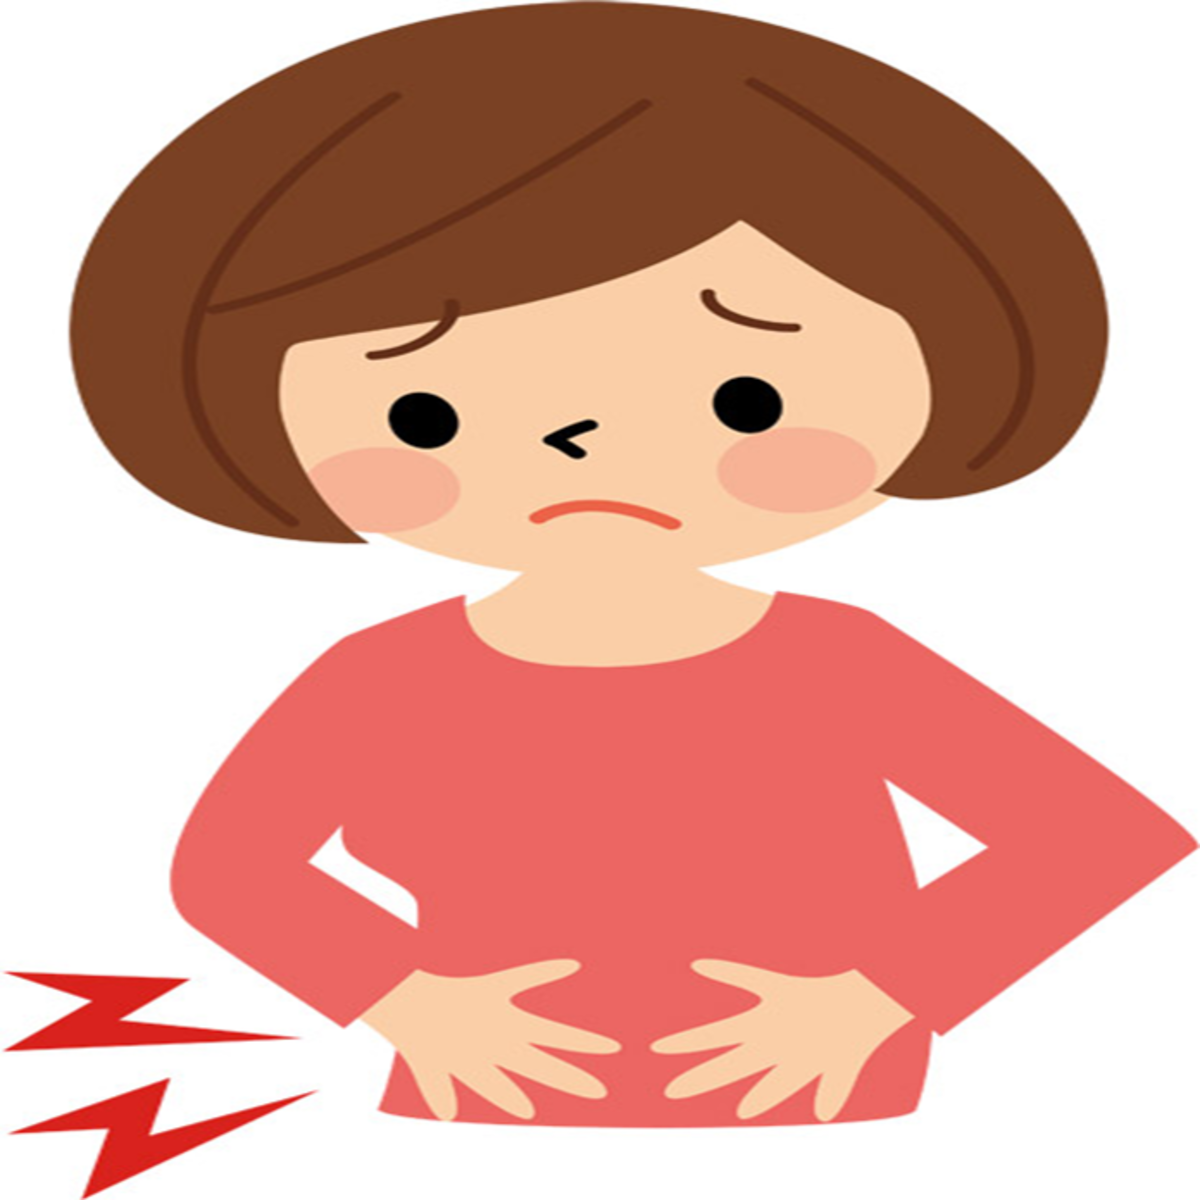 What causes Crohn's disease?